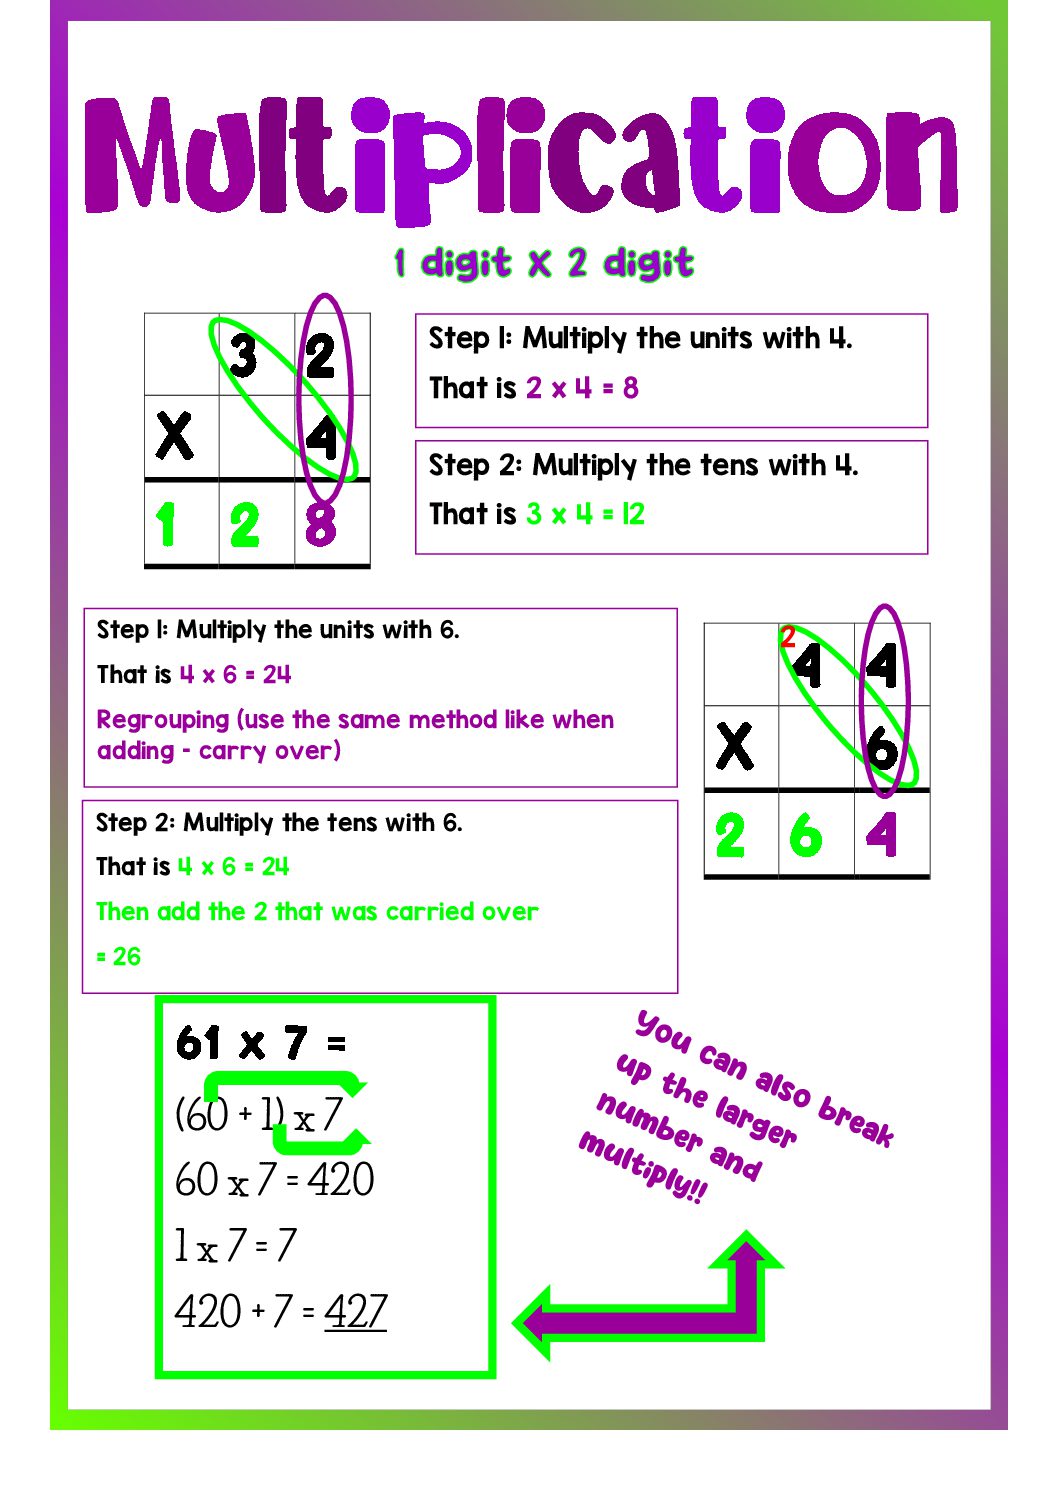 anchor-chart-1-x-2-digit-multiplication-teacha